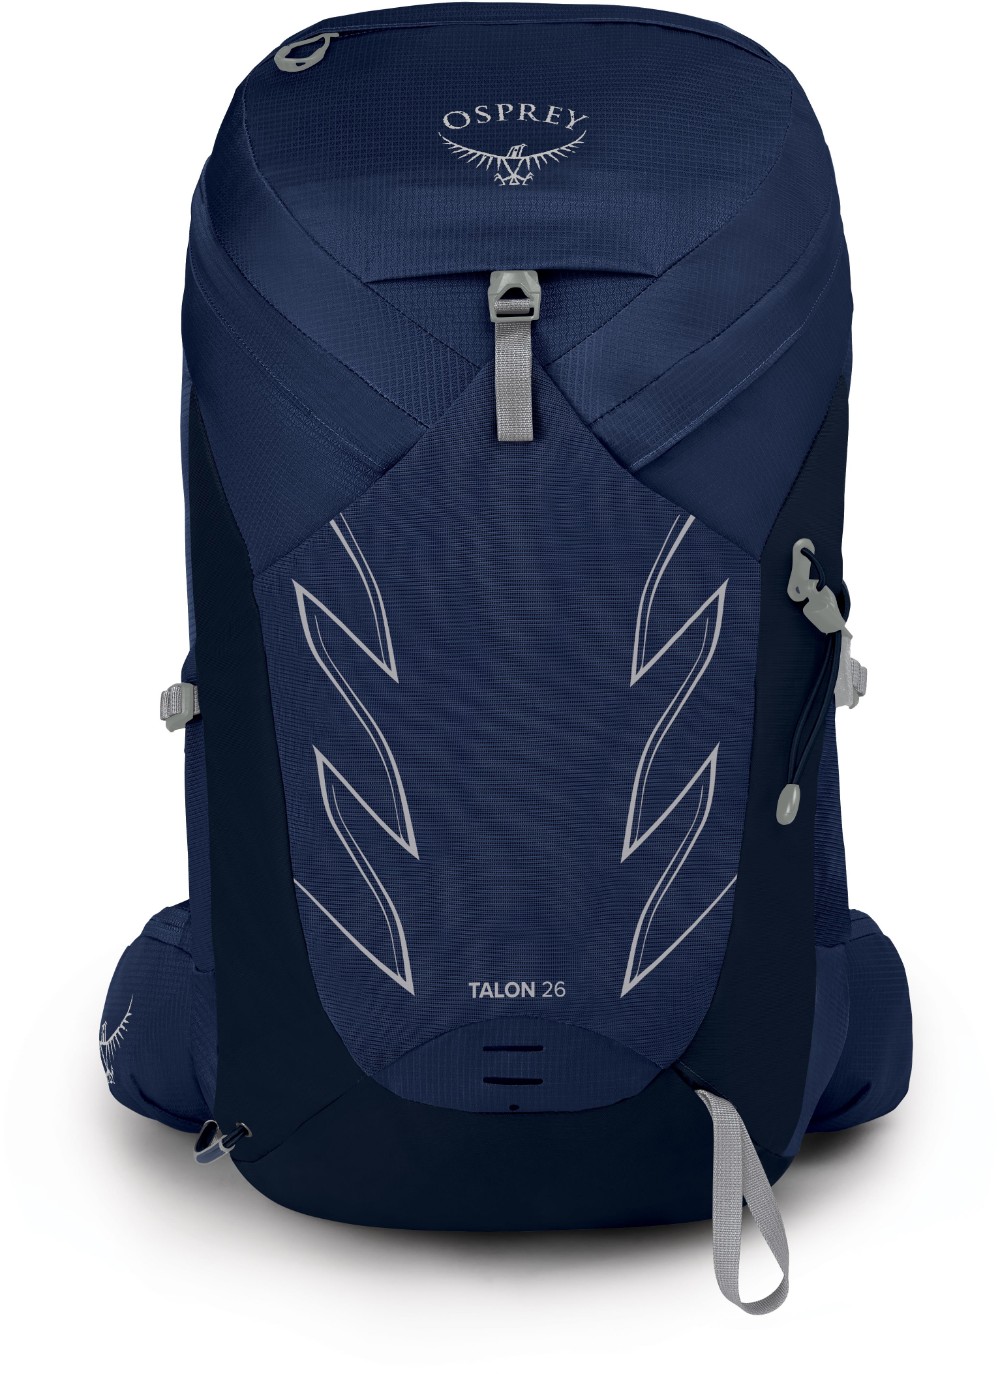 Talon 26 Backpack image 2